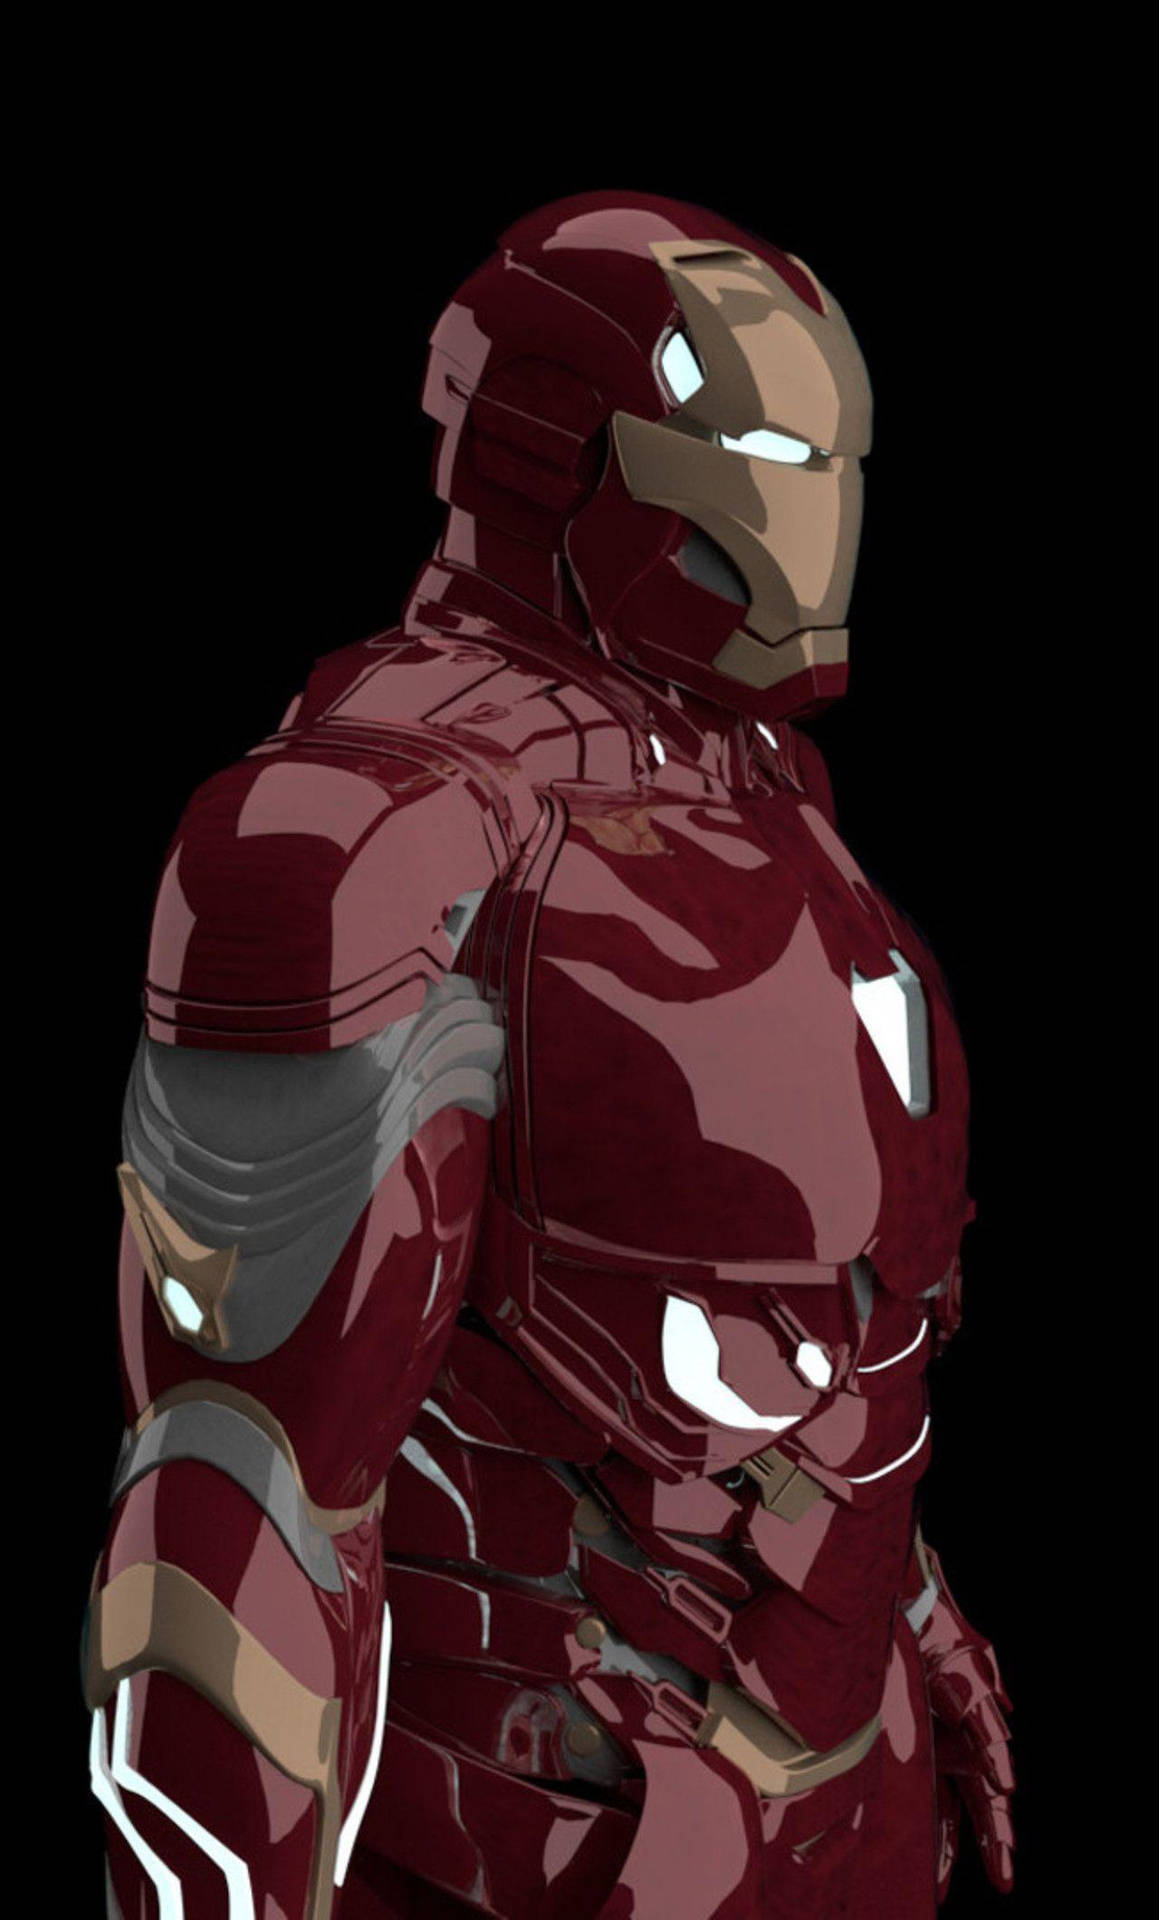 Shiny Suit Iron Man Iphone Wallpaper